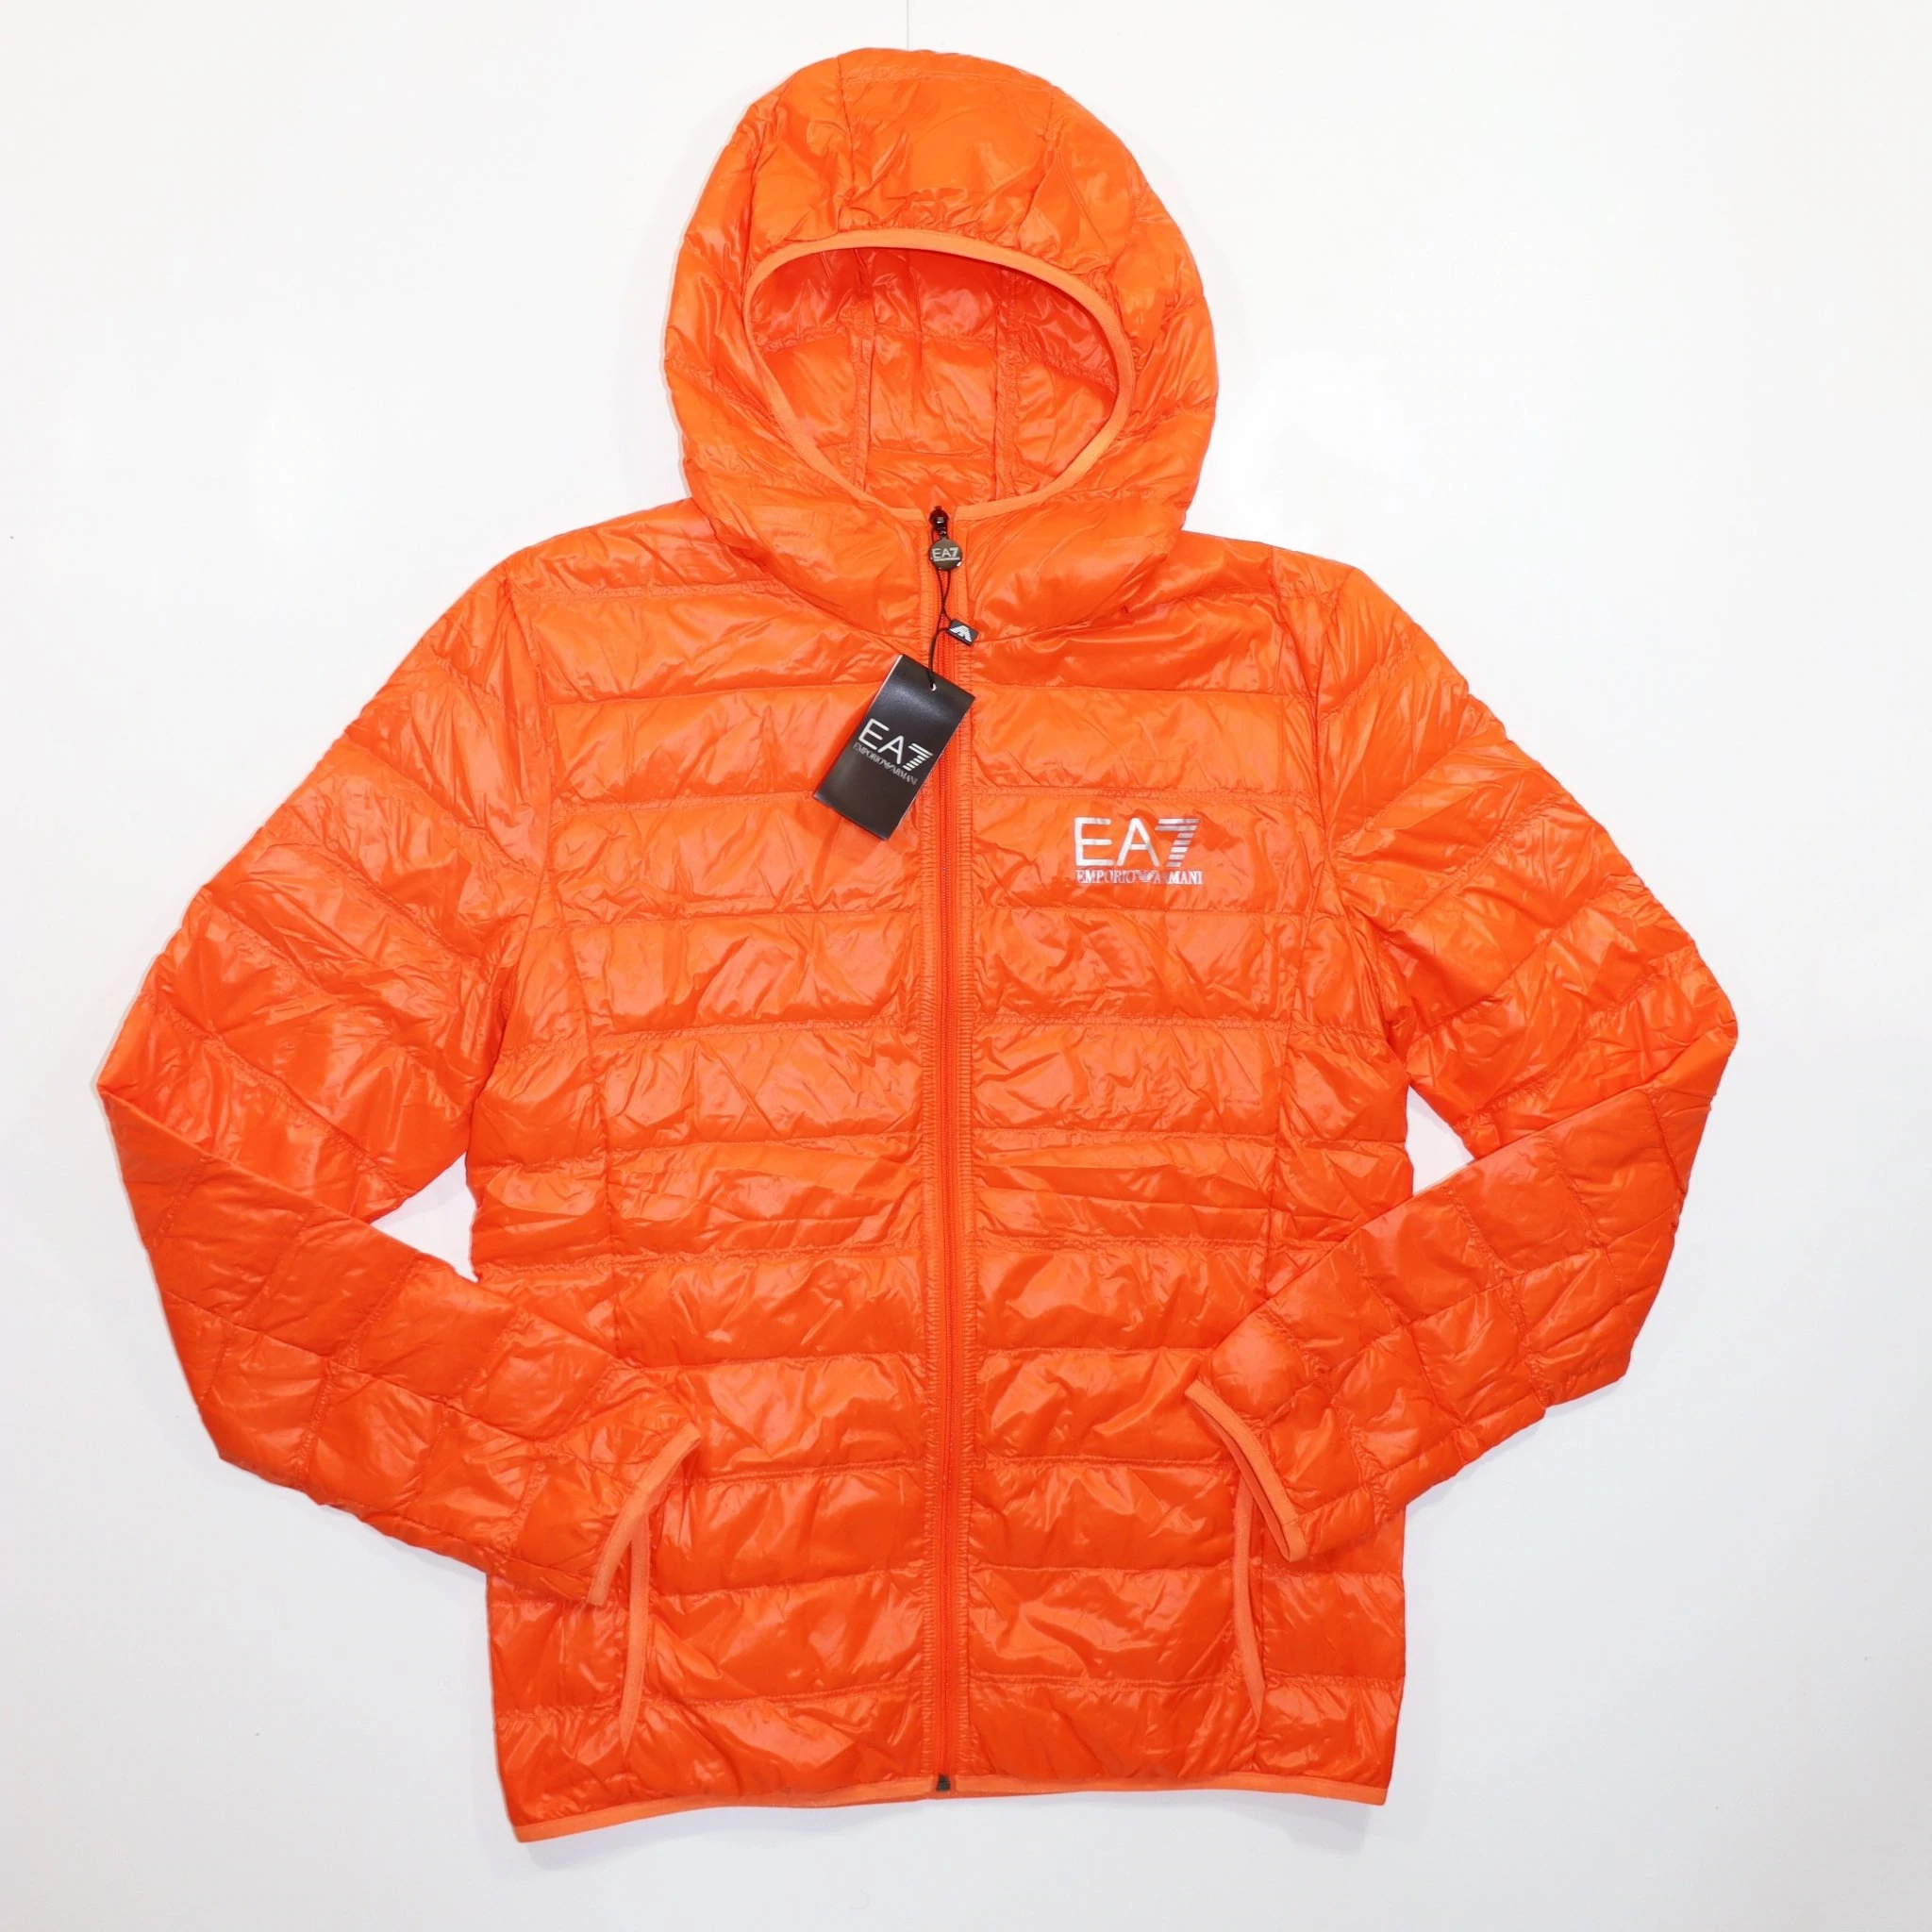 orange armani jacket